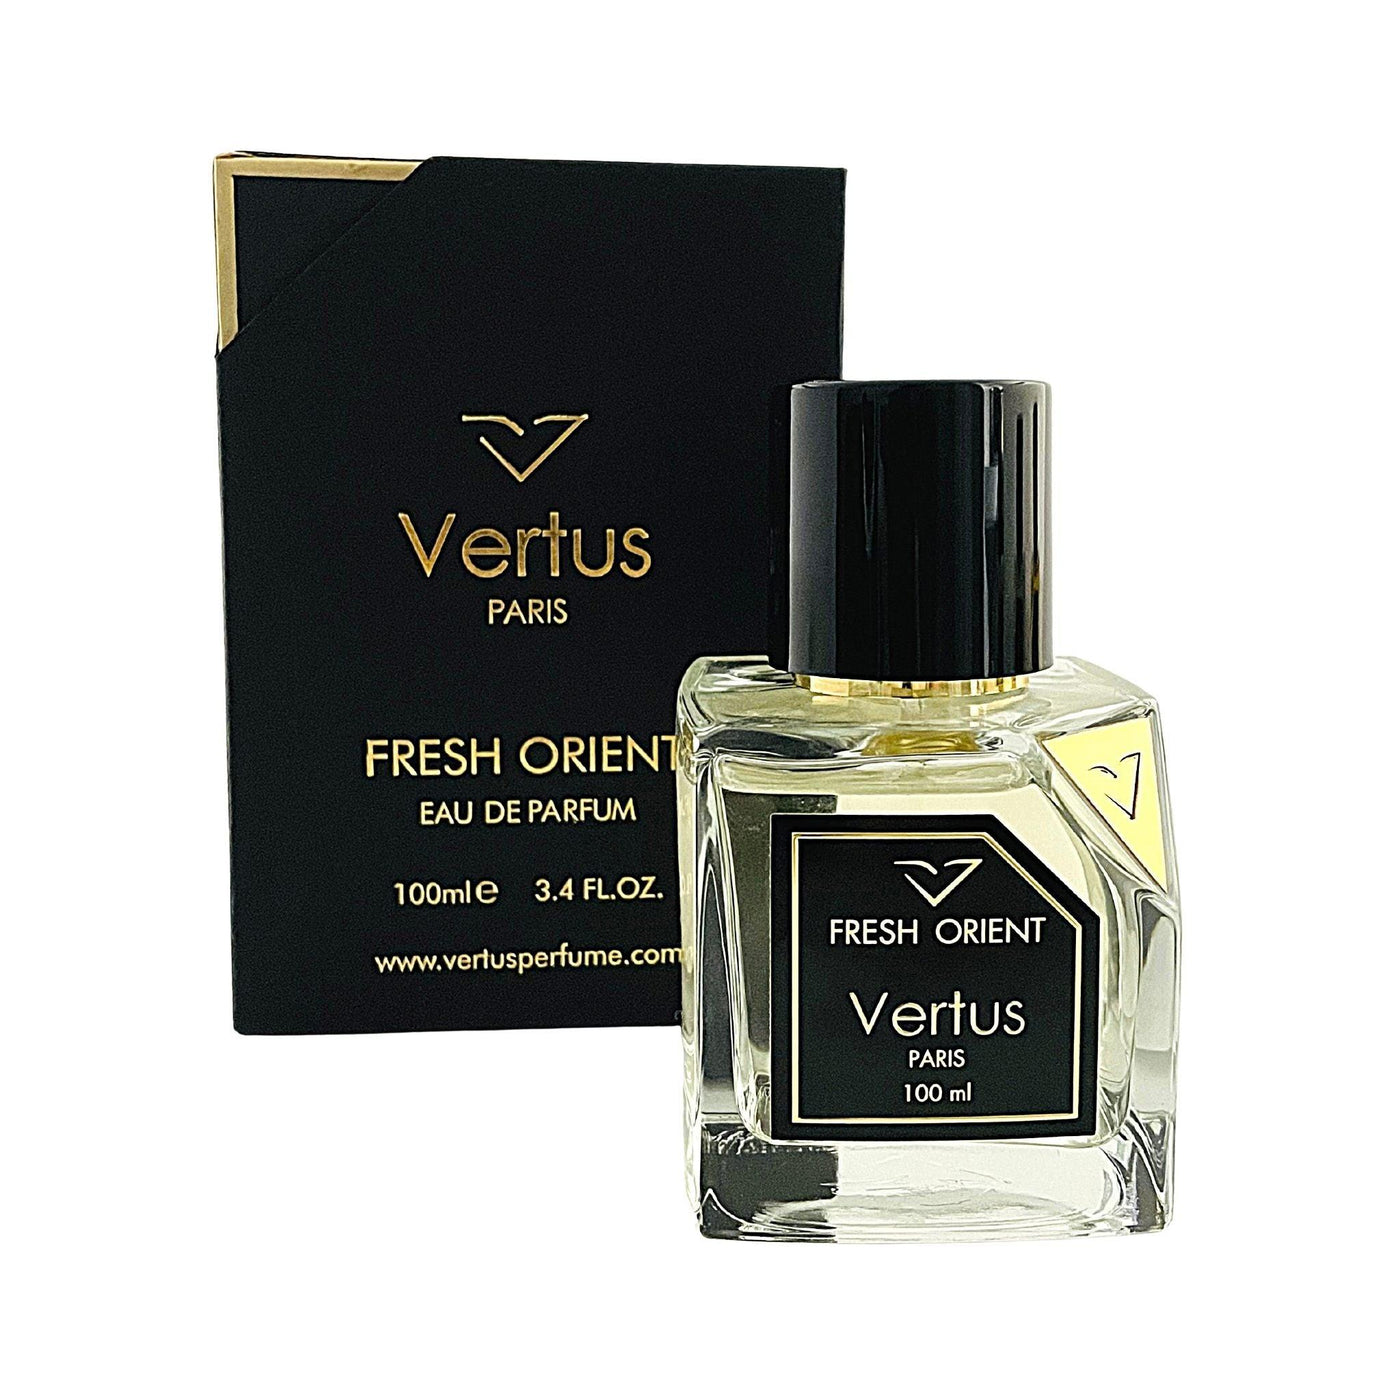 Fresh orient EDP 100ml 3,4 Oz by Vertus perfumes